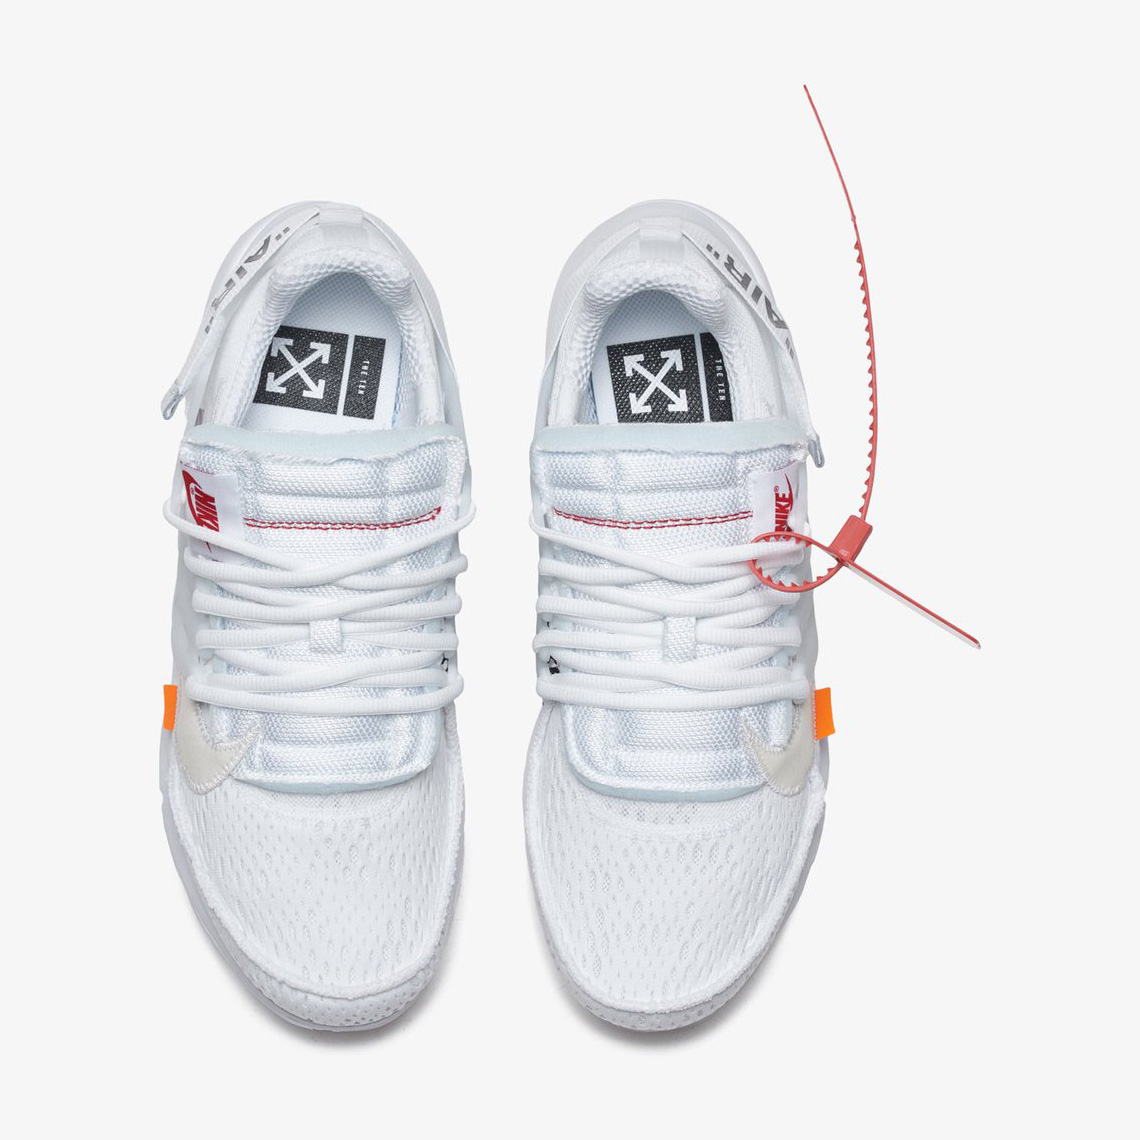 Off-White Nike Presto Official Release Info + Photos | SneakerNews.com